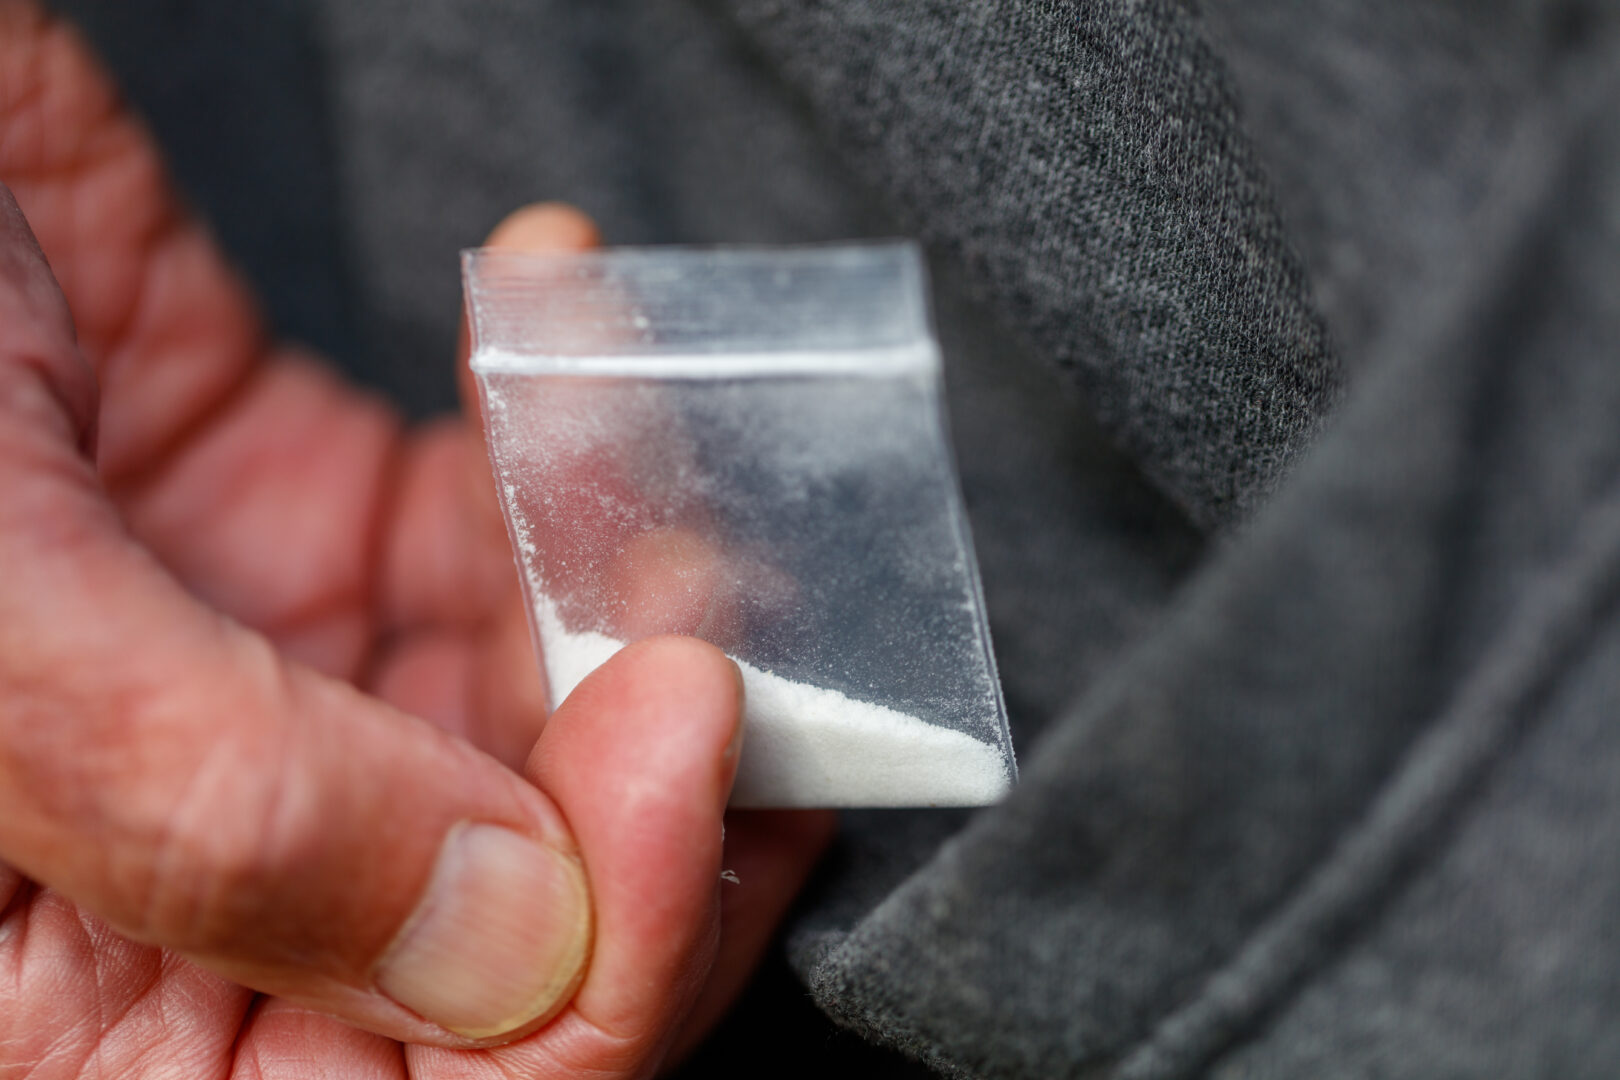 fentanyl opiate in plastic bag in hand close-up